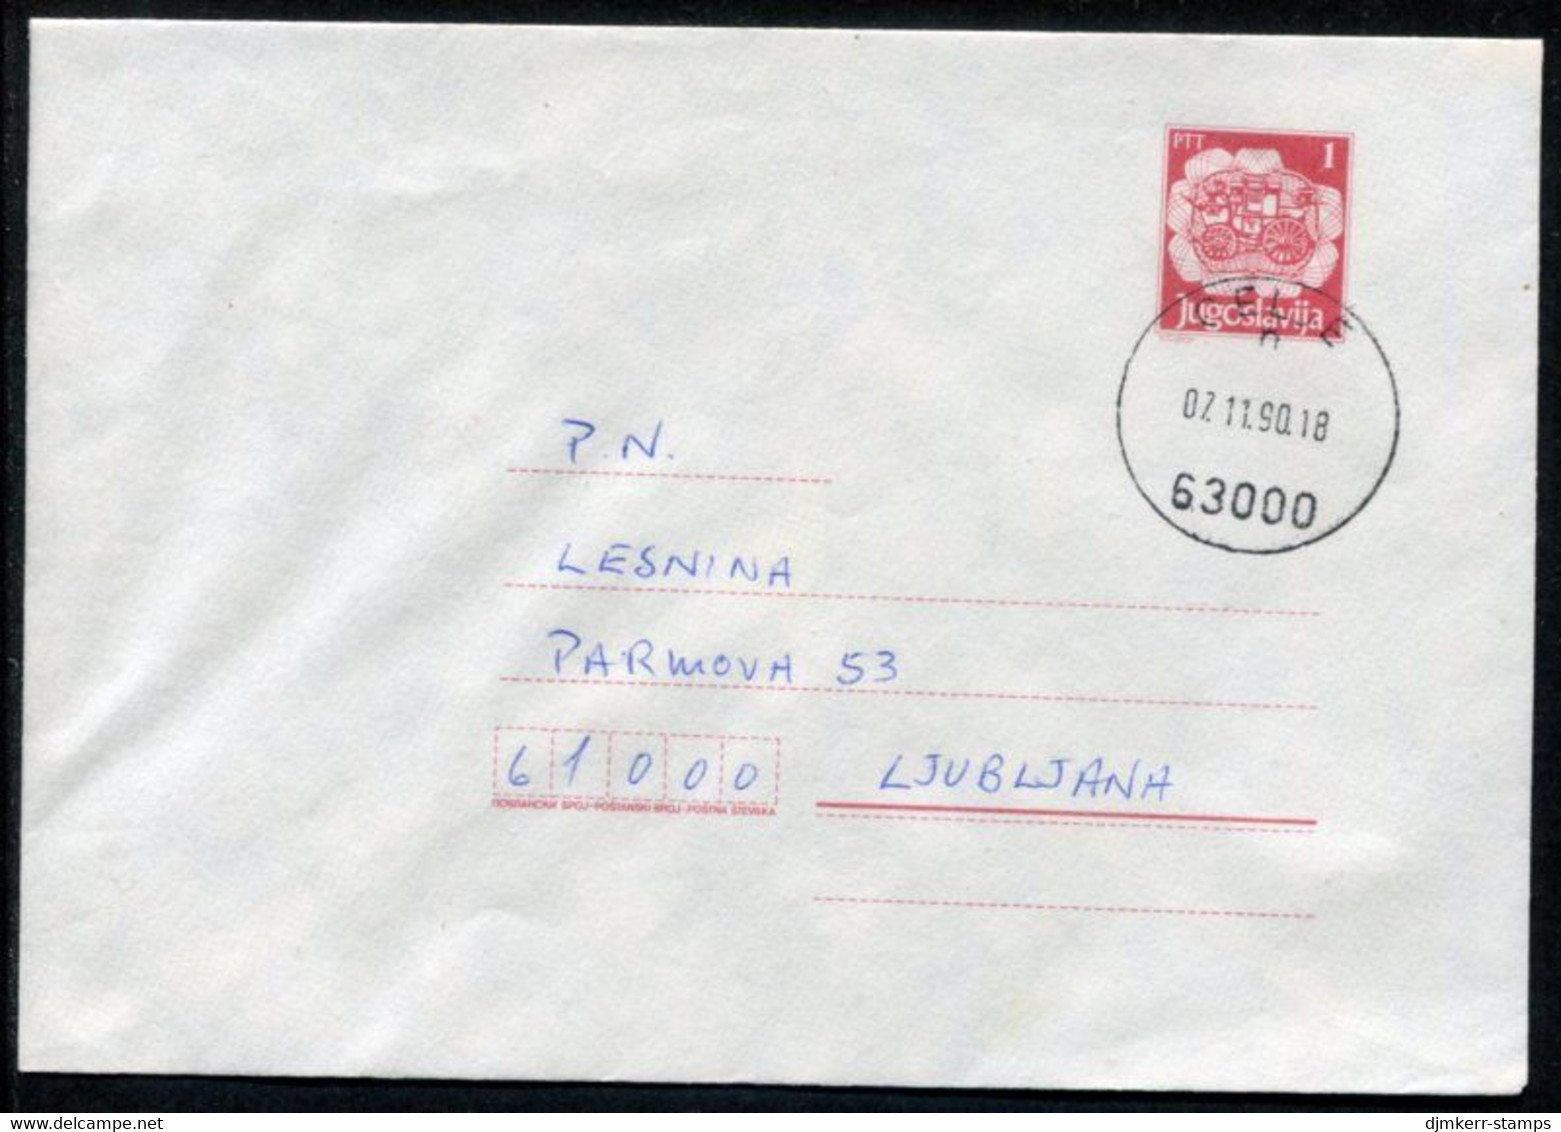 YUGOSLAVIA 1990 Mailcoach 1 D. Stationery Envelope Used Without Additional Franking.  Michel U95 - Postal Stationery